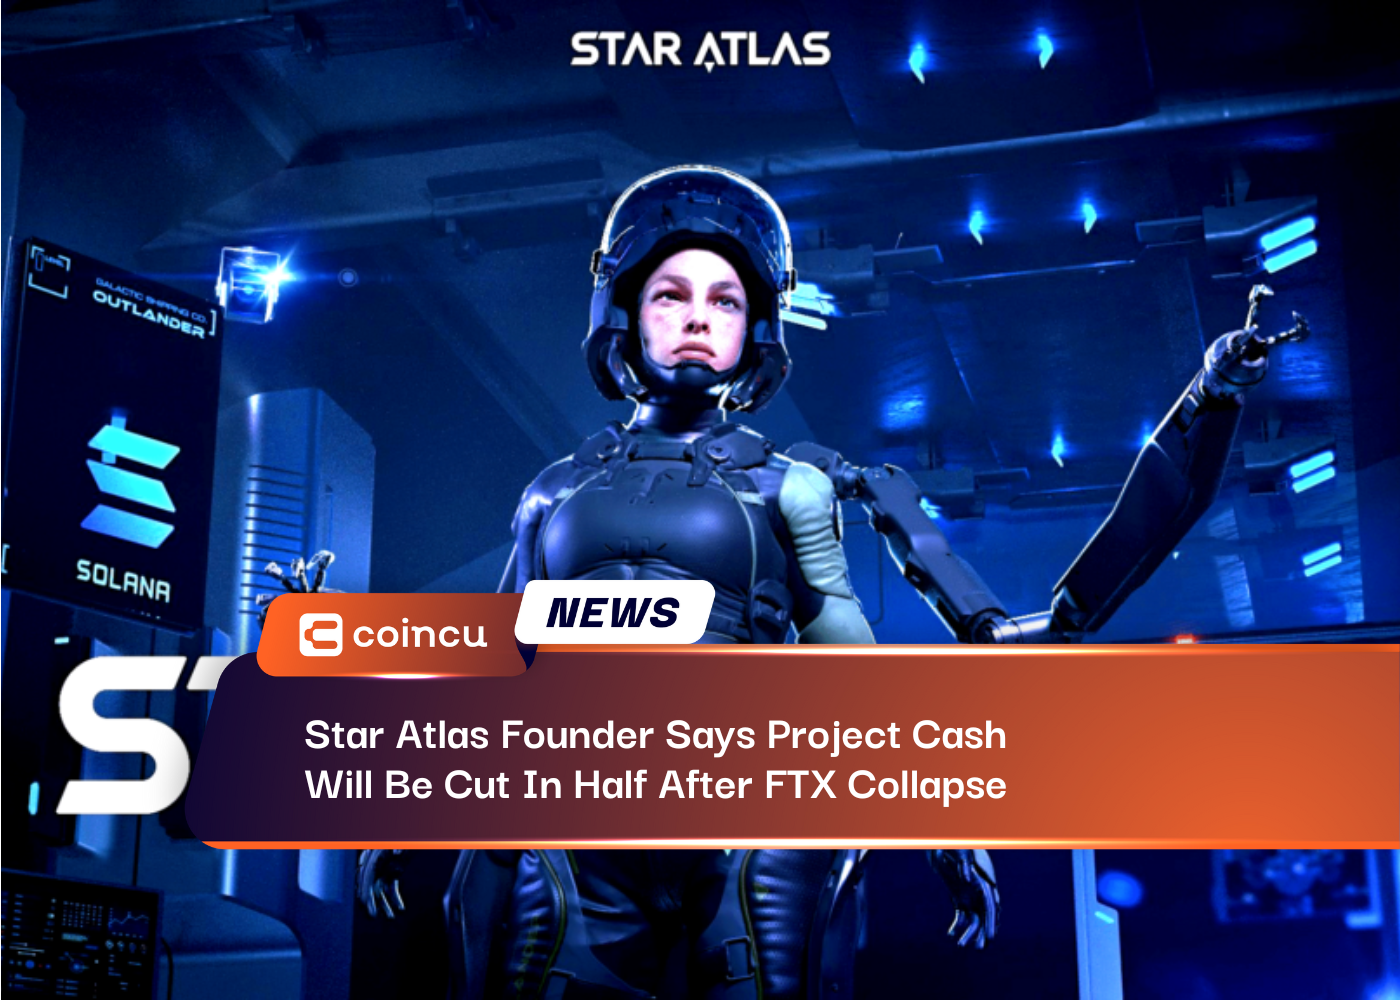 Star Atlas 창립자는 FTX 붕괴 후 프로젝트 현금이 절반으로 줄어들 것이라고 말했습니다.